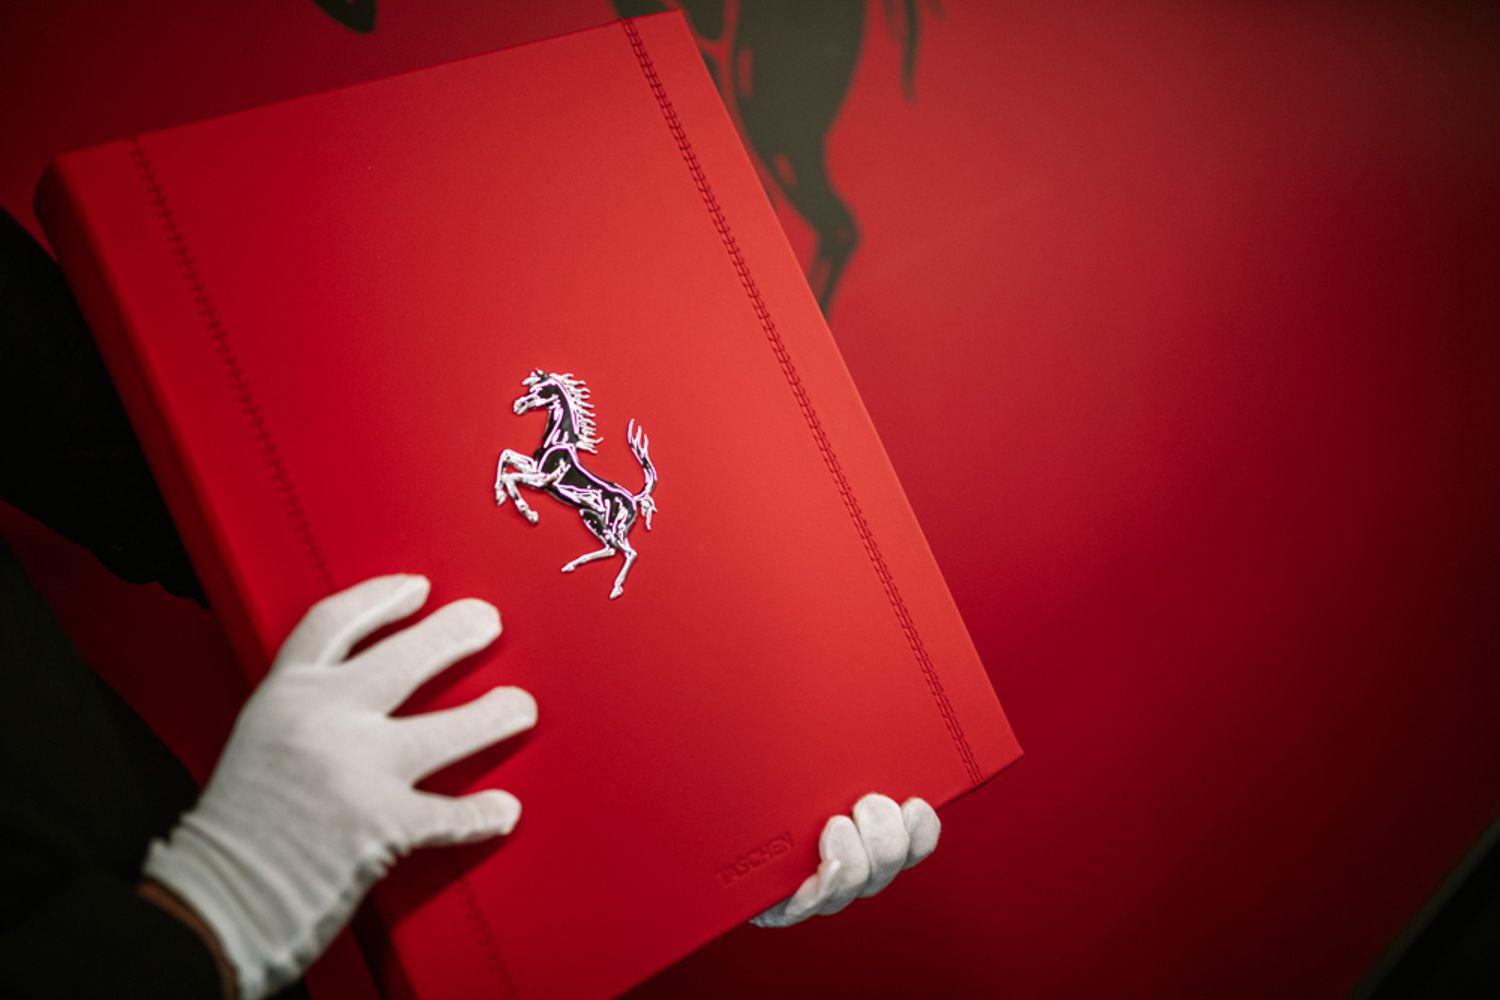 FERRARI Taschen's Ferrari Book Limited Edition